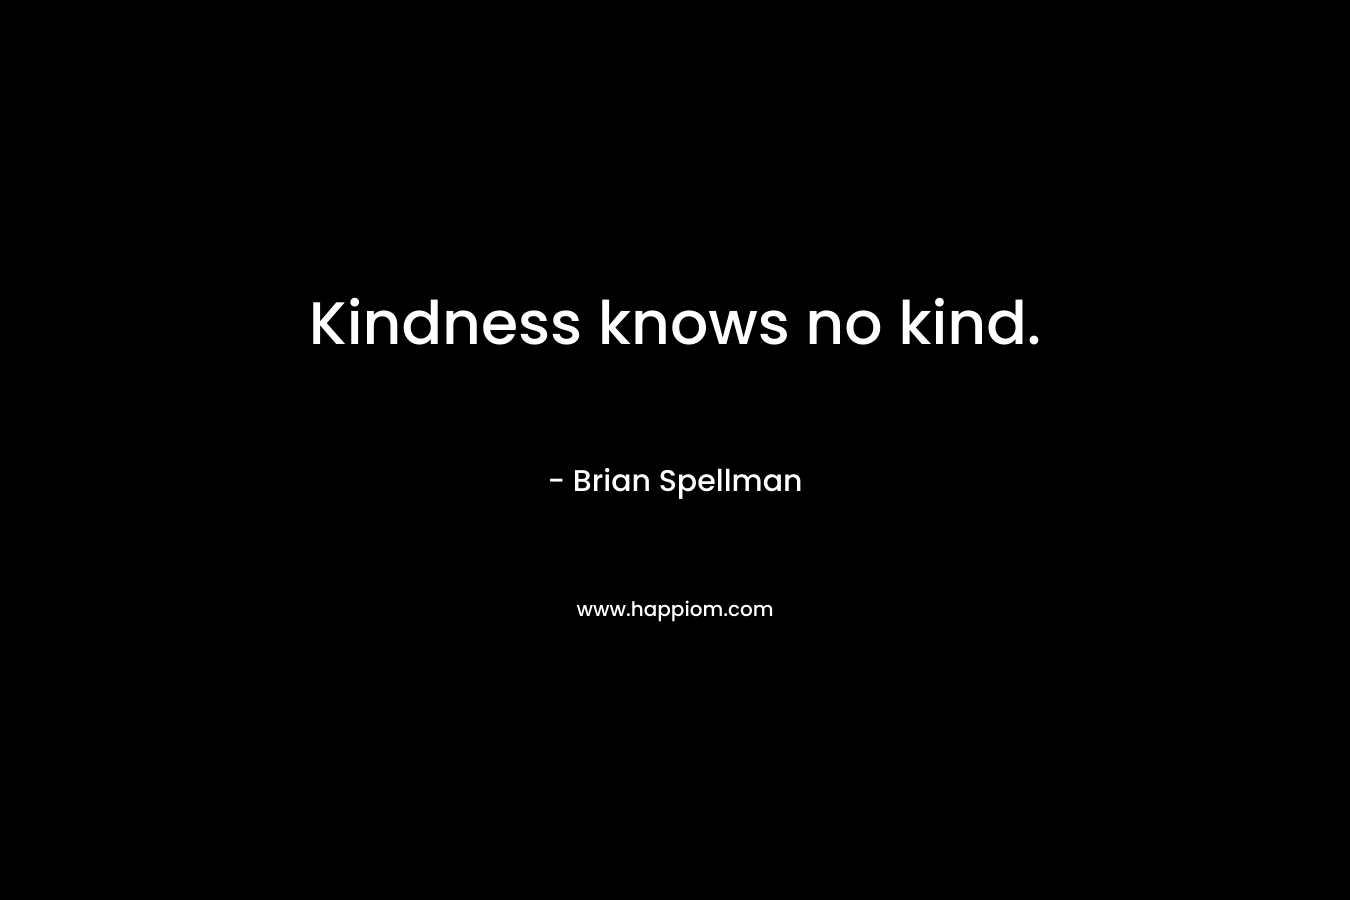 Kindness knows no kind.